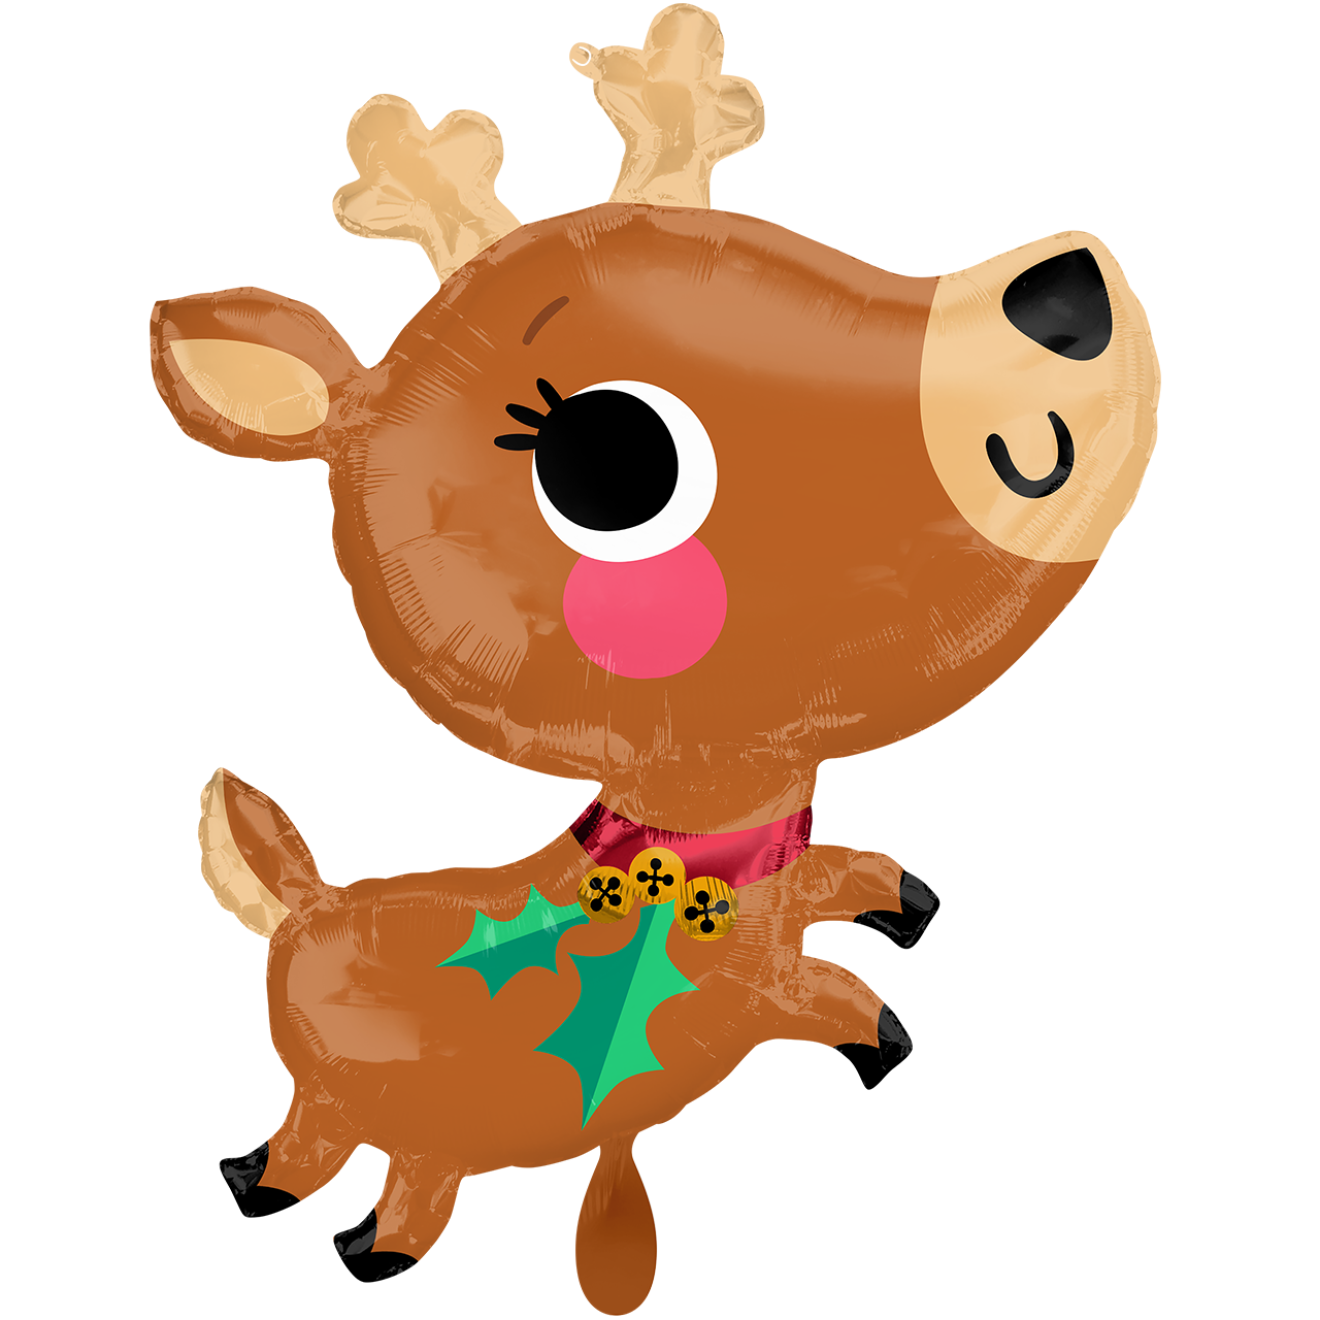 1 Balloon XXL - Adorable Reindeer